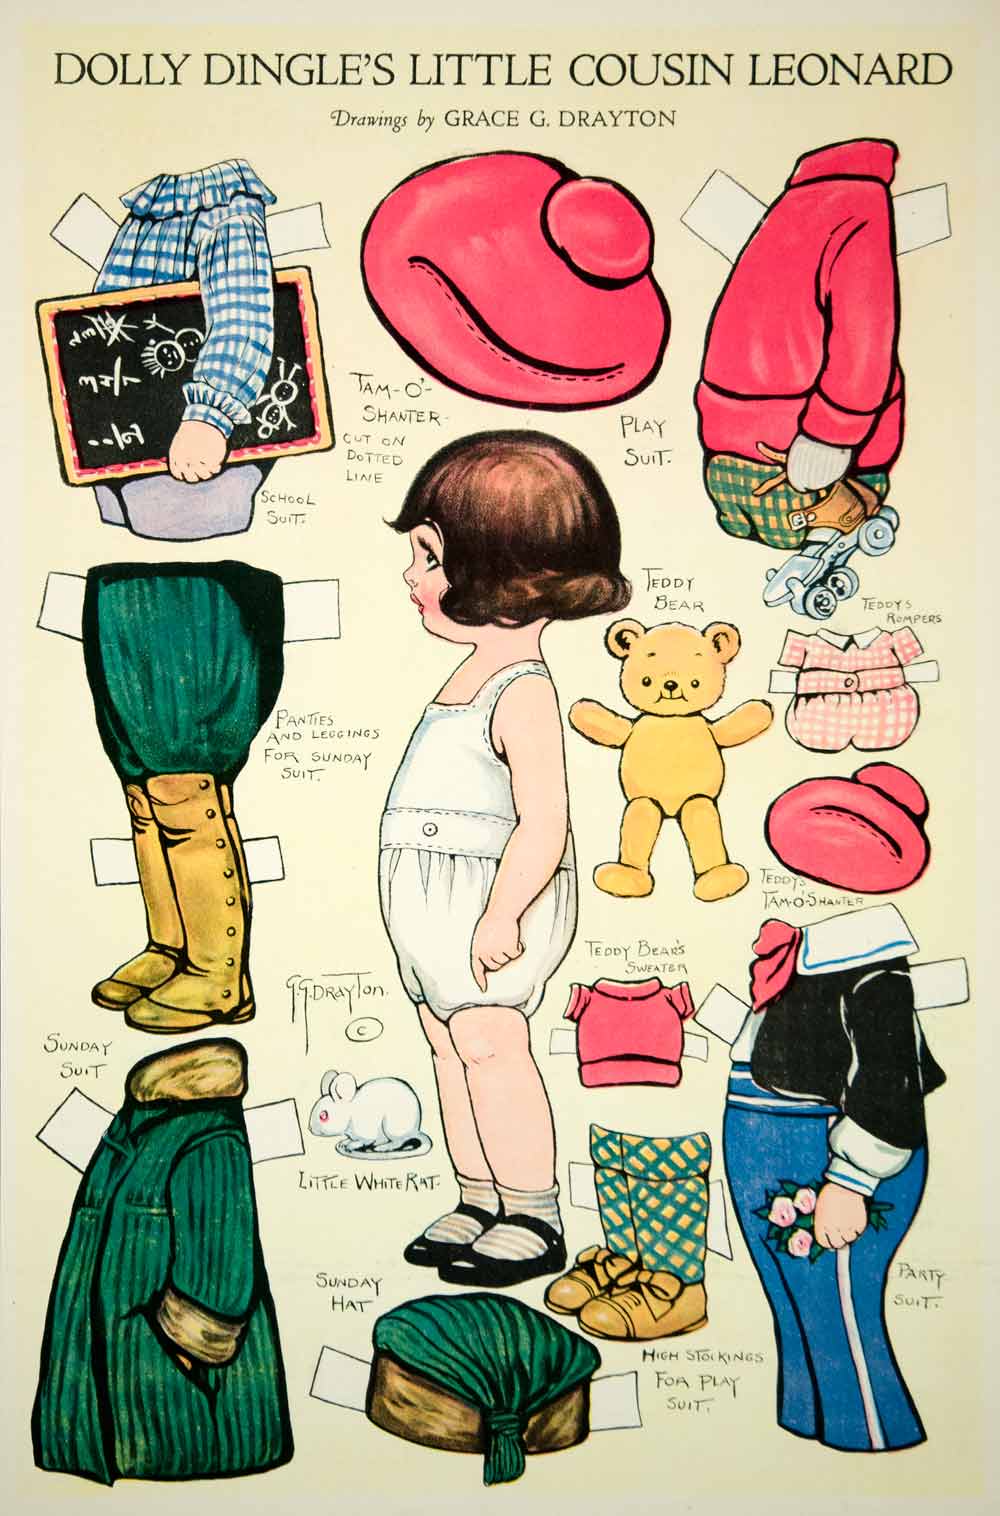 1920 Color Print Dolly Dingle Vintage Paper Doll Grace G. Drayton Cartoon Art